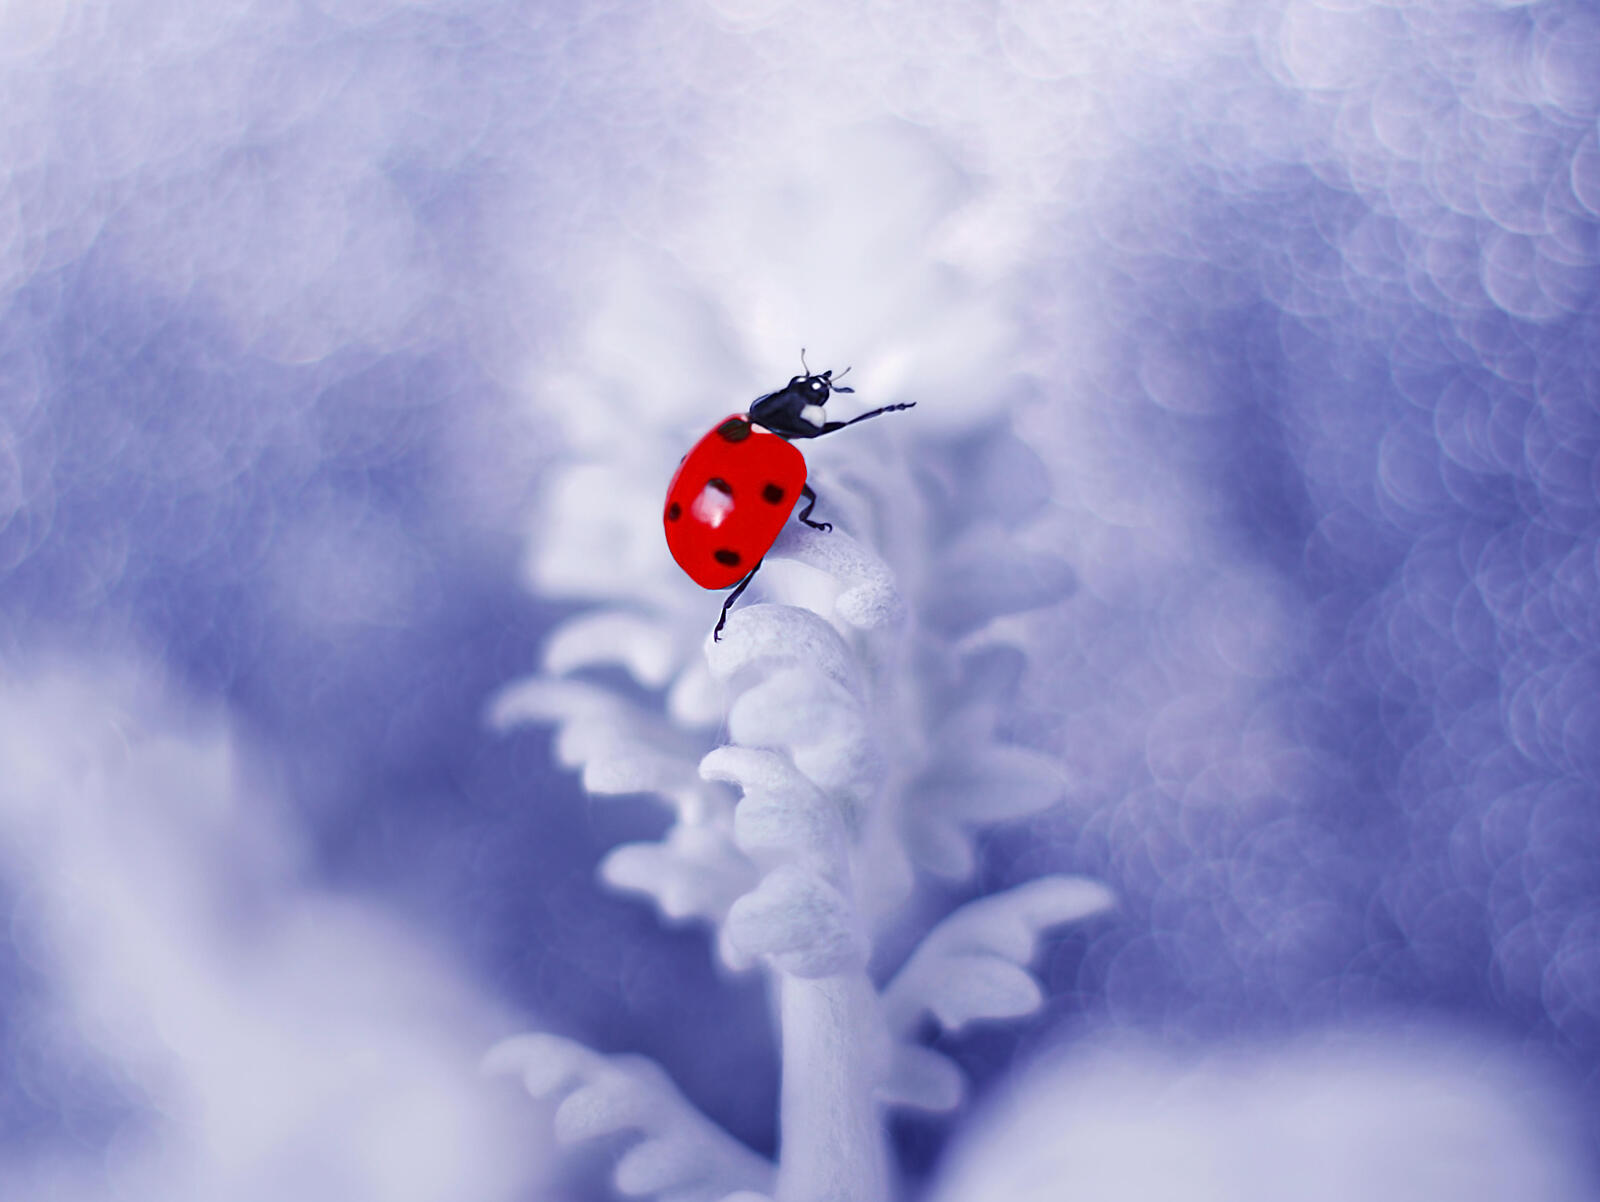 Wallpapers ladybug macro close-up on the desktop